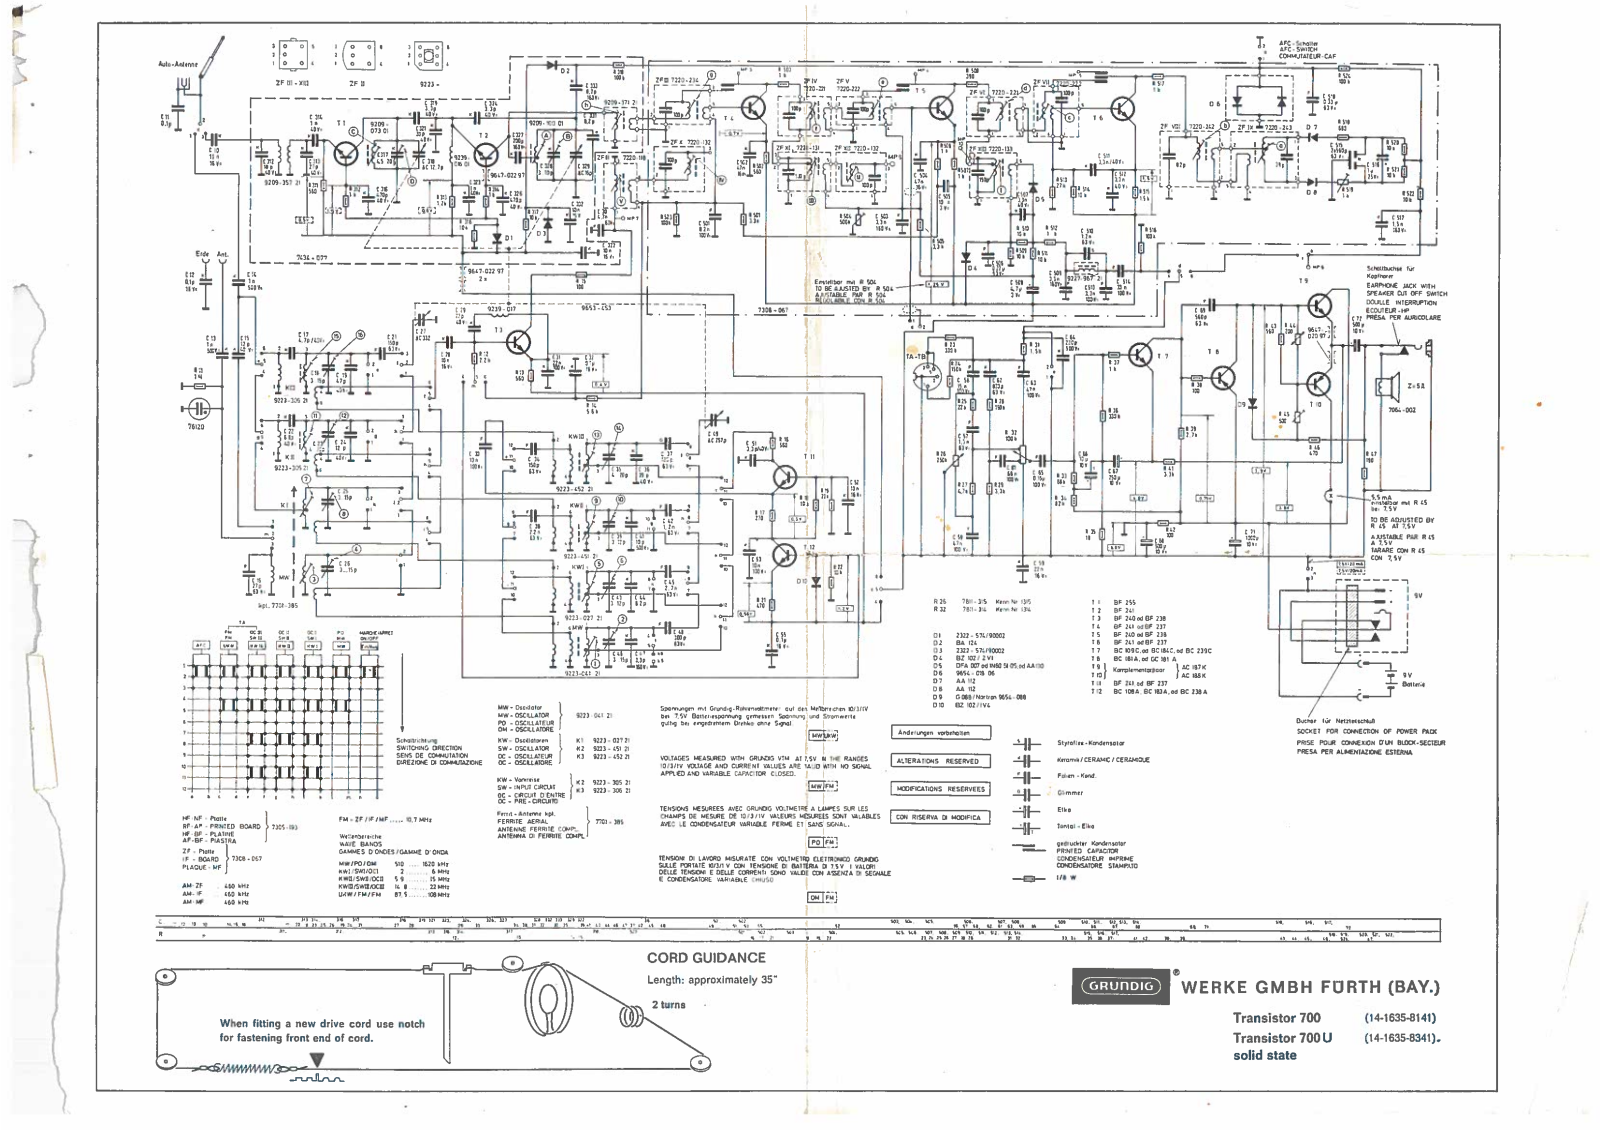 Grundig Transistor 700, Transistor 700U Schematic